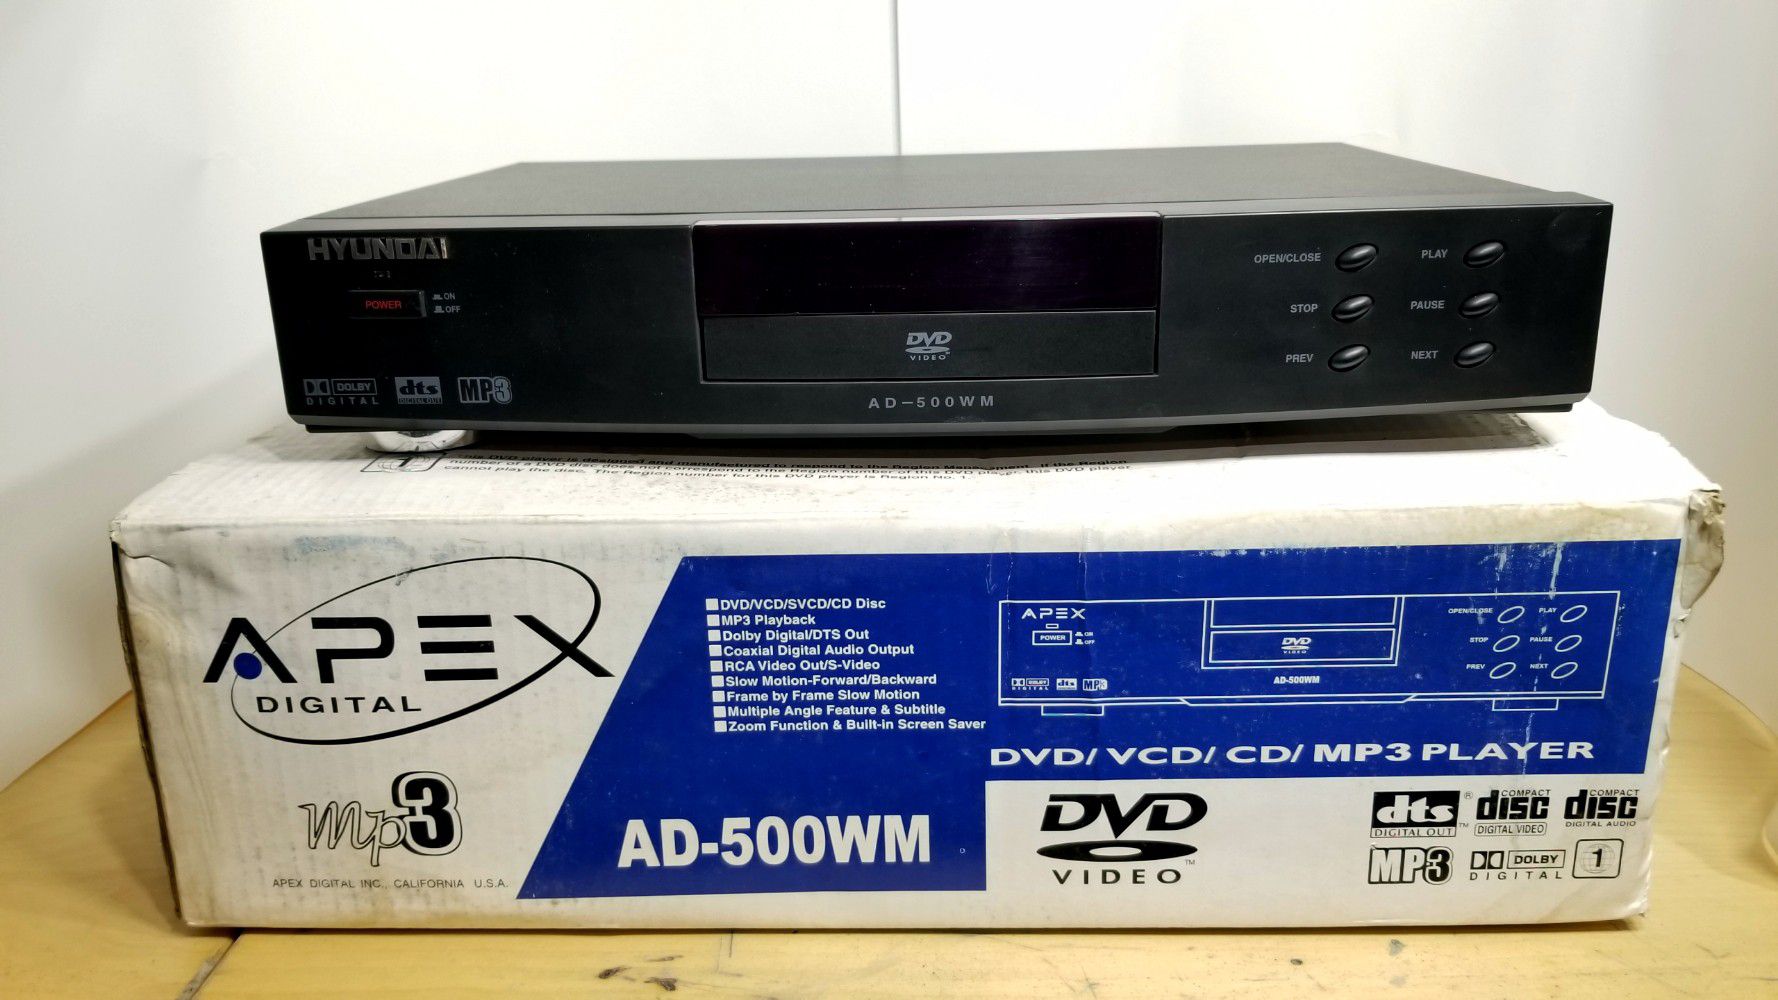 APEX Digital Hyundai DVD / MP3 Player - BRAND NEW IN BOX! PRICE REDUCED!